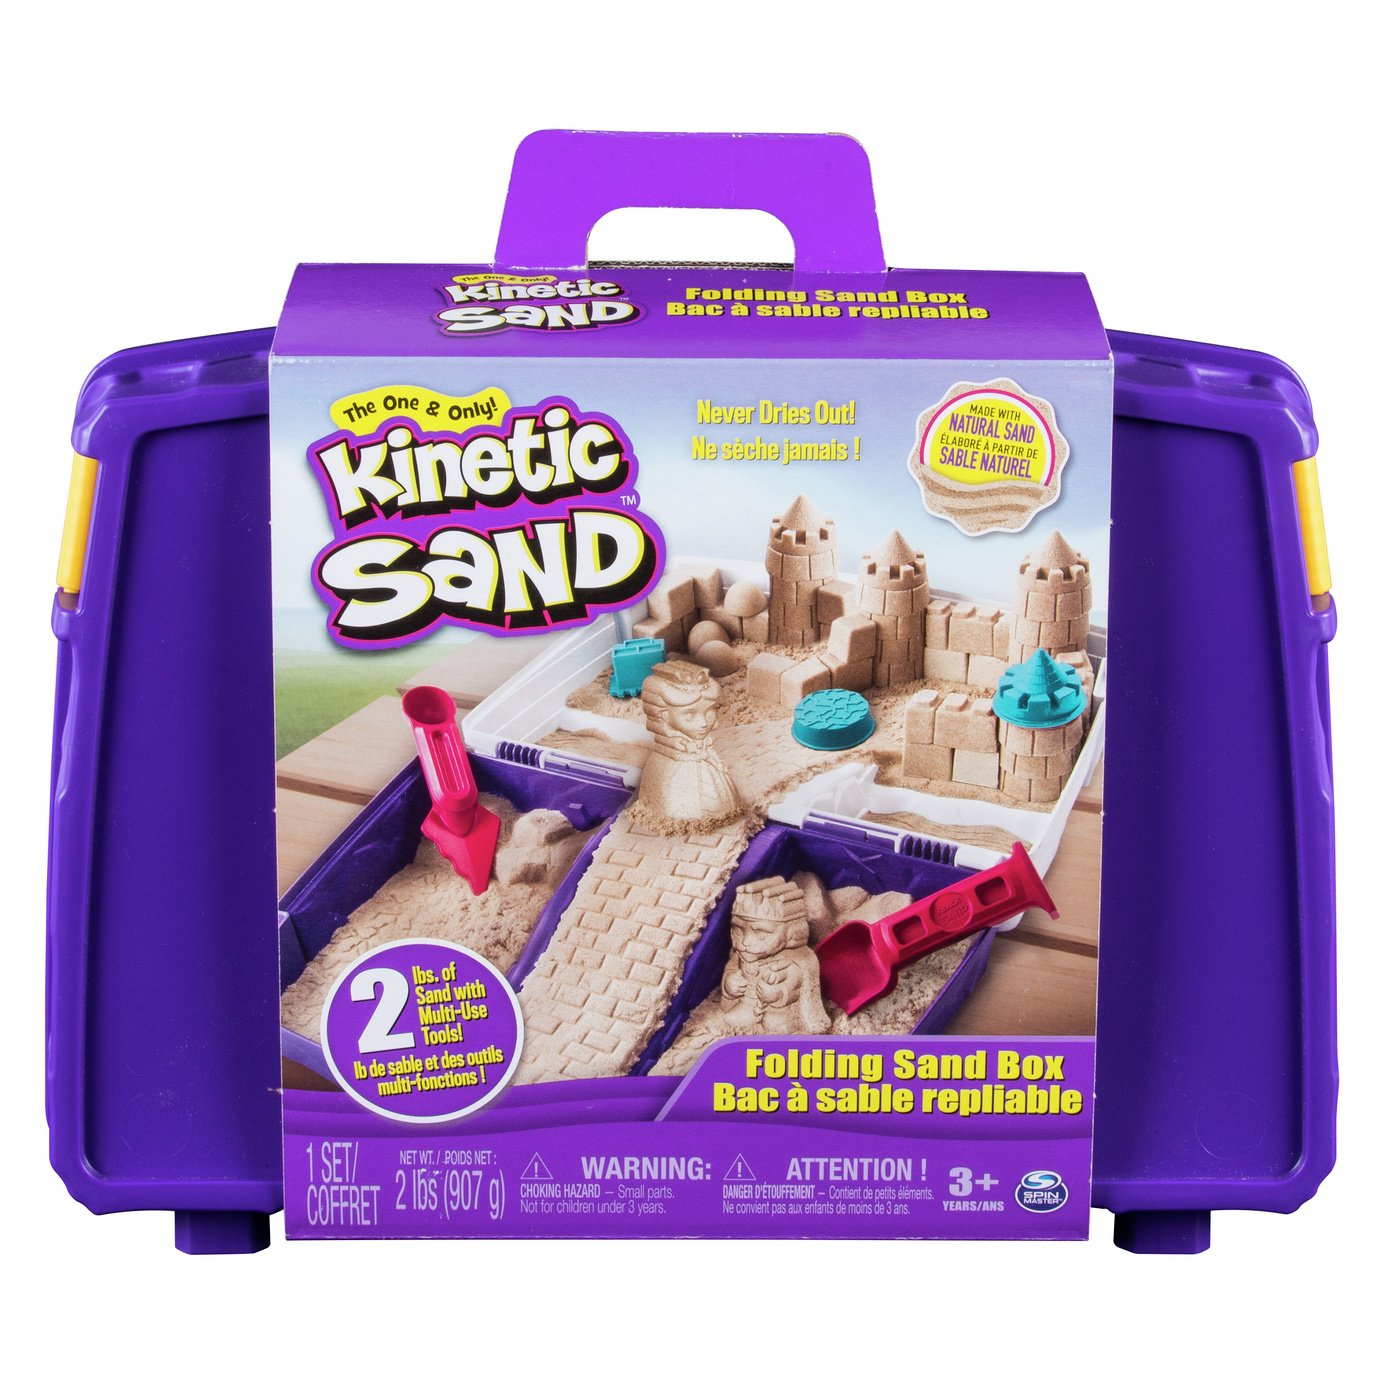 Kinetic Sand Folding Sand Box Review